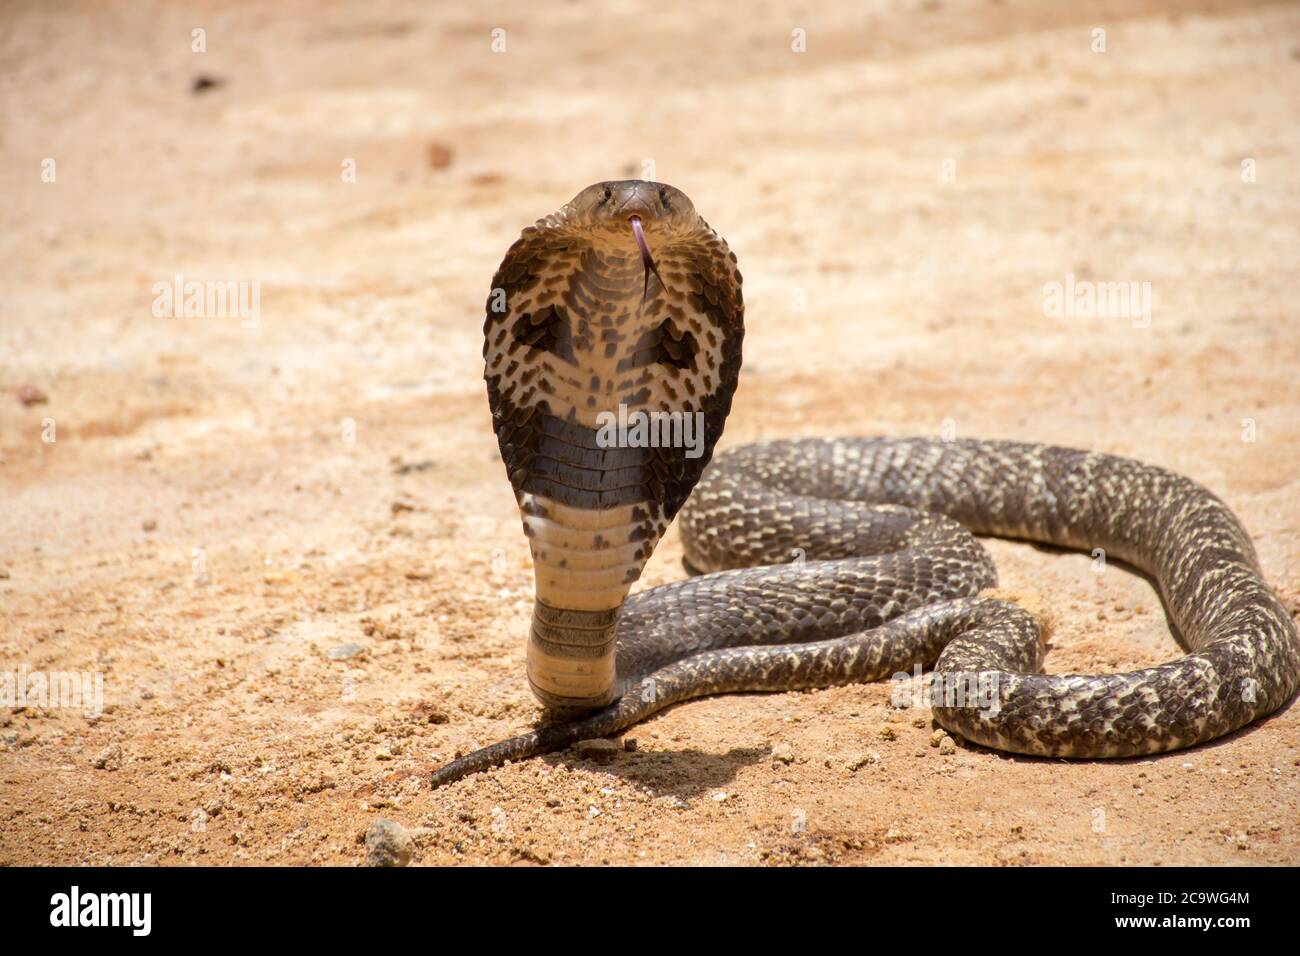 The King Cobra on sand Stock Photo